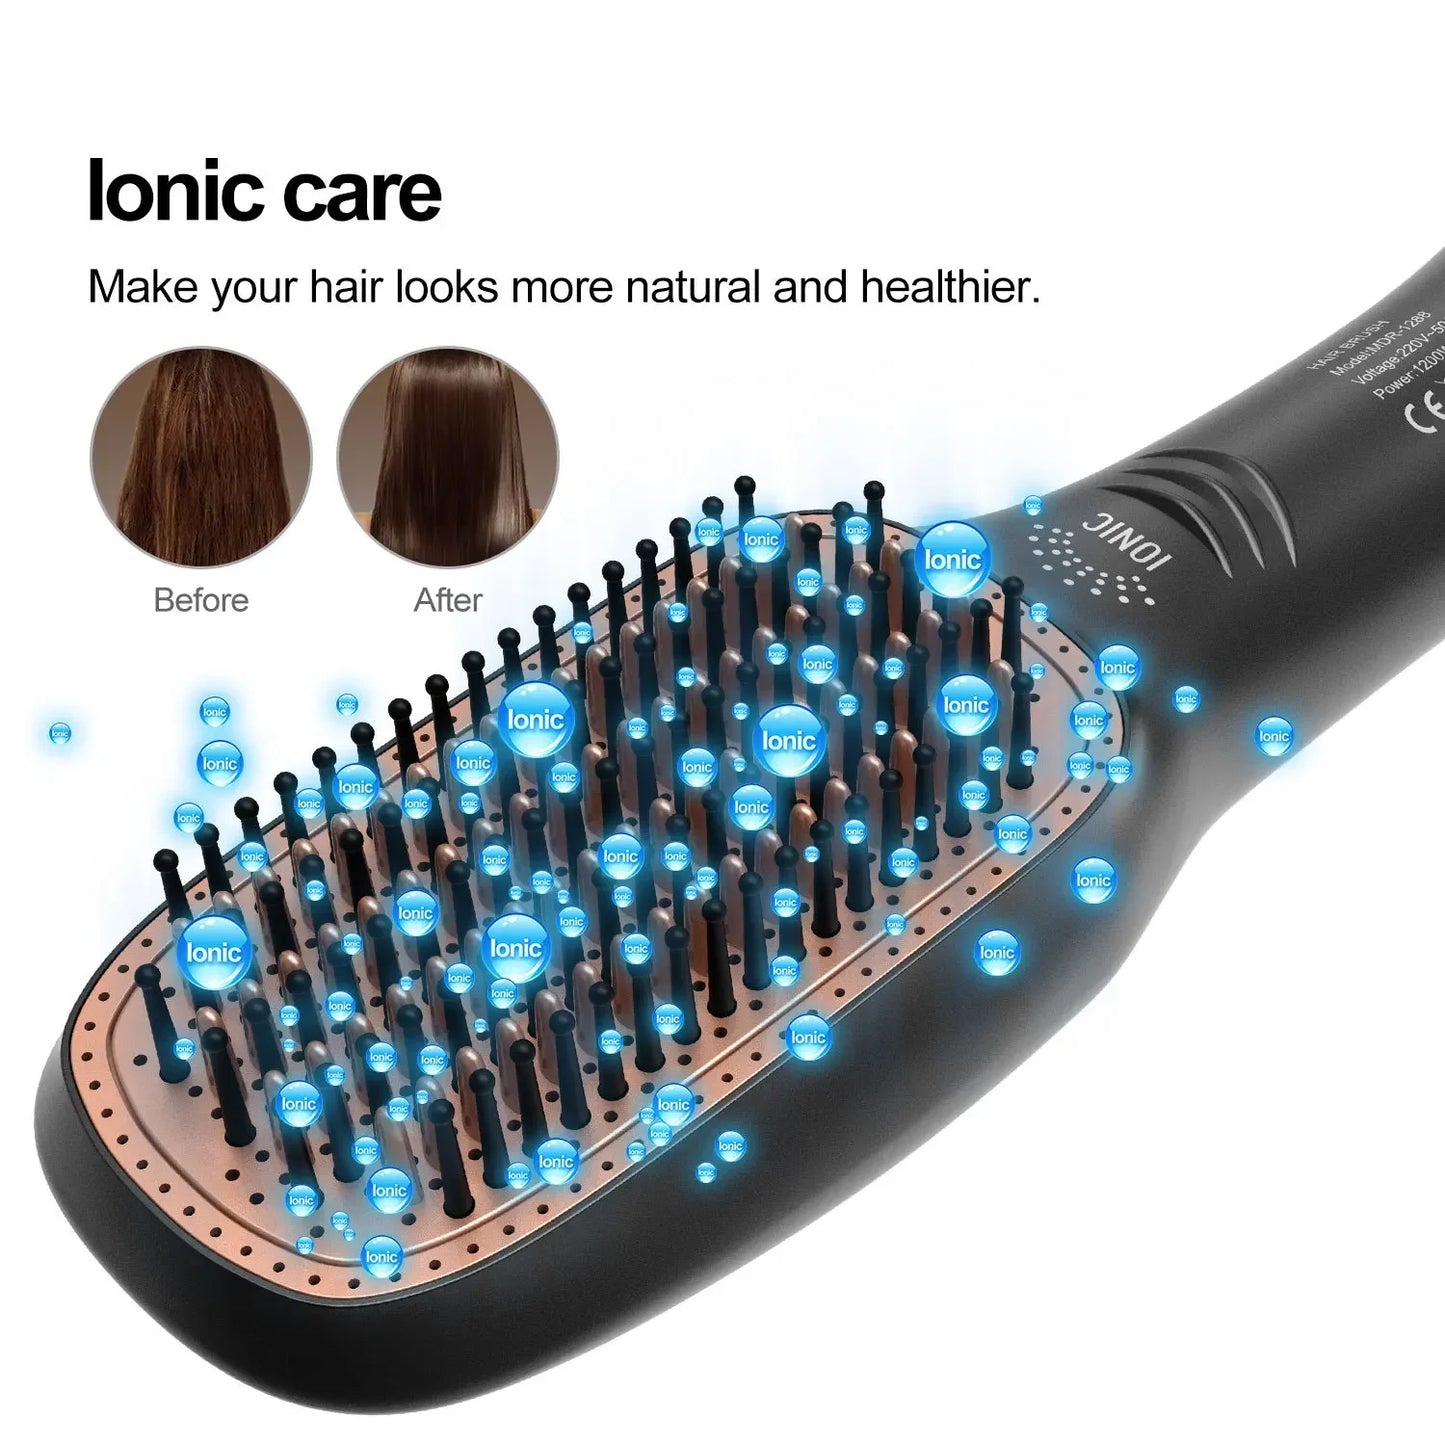 1. 3 In 1 Hairdryer Brush
2. Overheating Protection Negative Ion Hair Straightener 
3. Fast Heating Lightweight Hair Straightening Tool